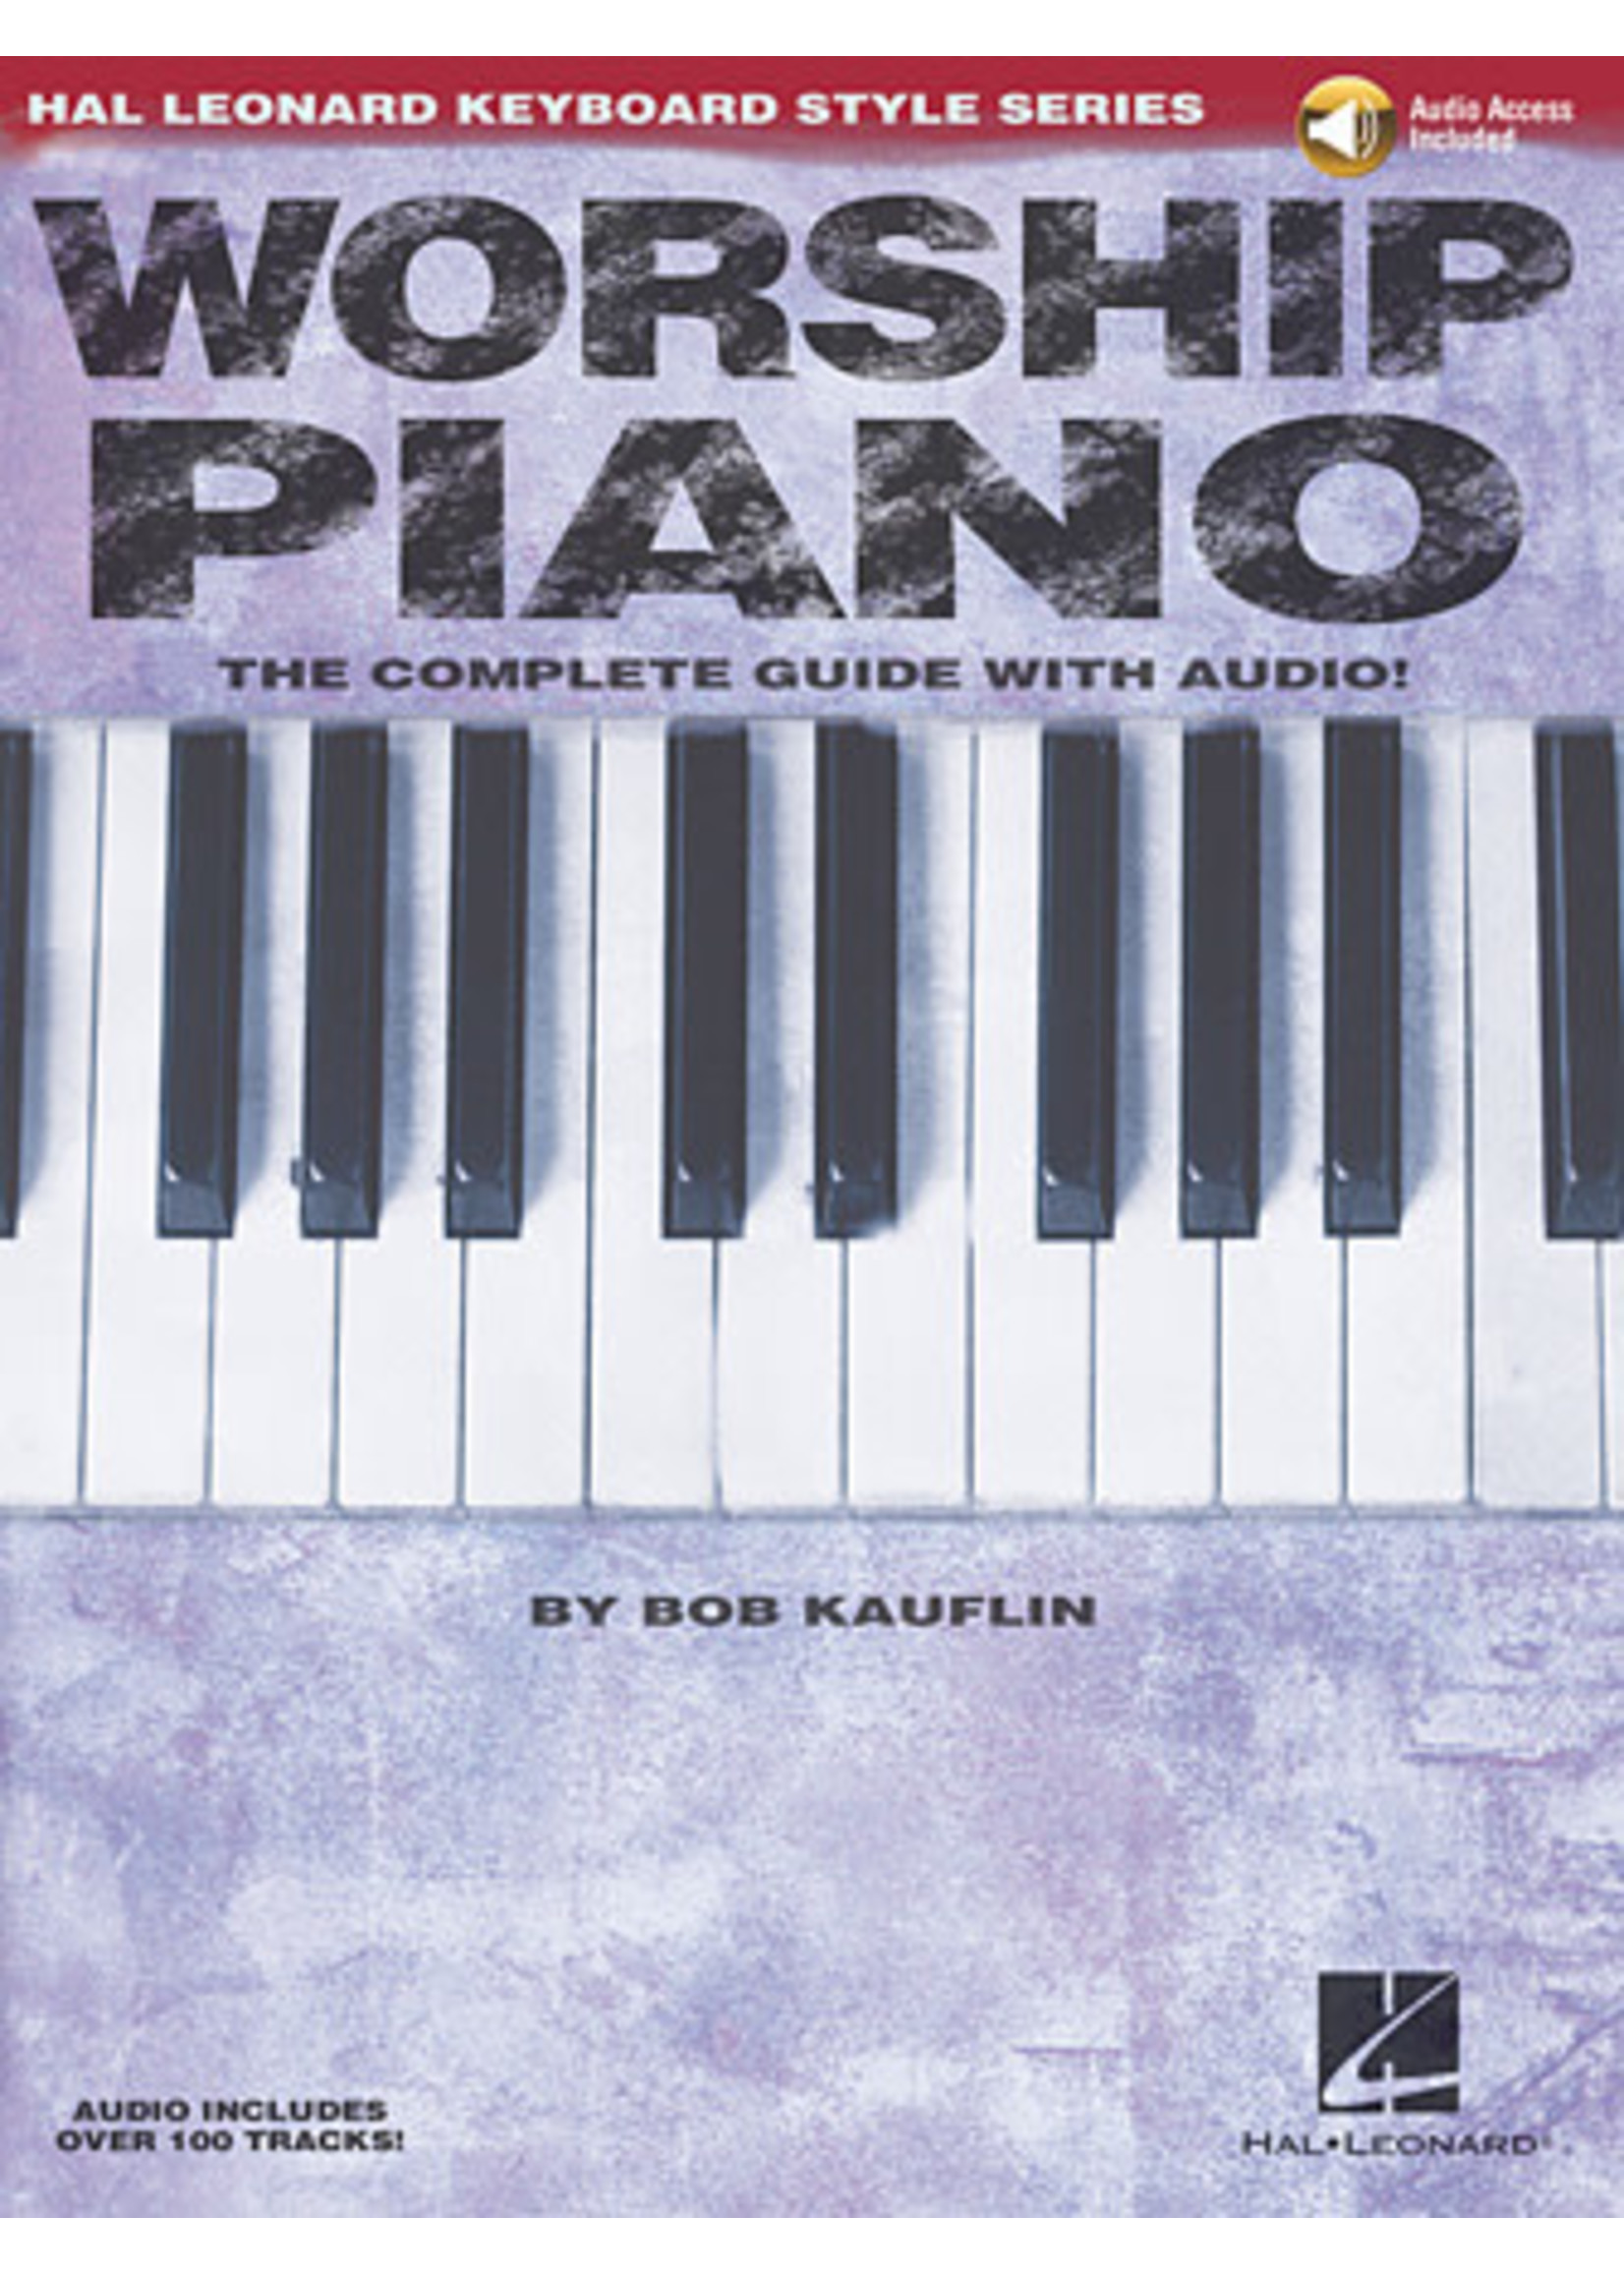 Hal Leonard Worship Piano - Hal Leonard Keyboard Style Series